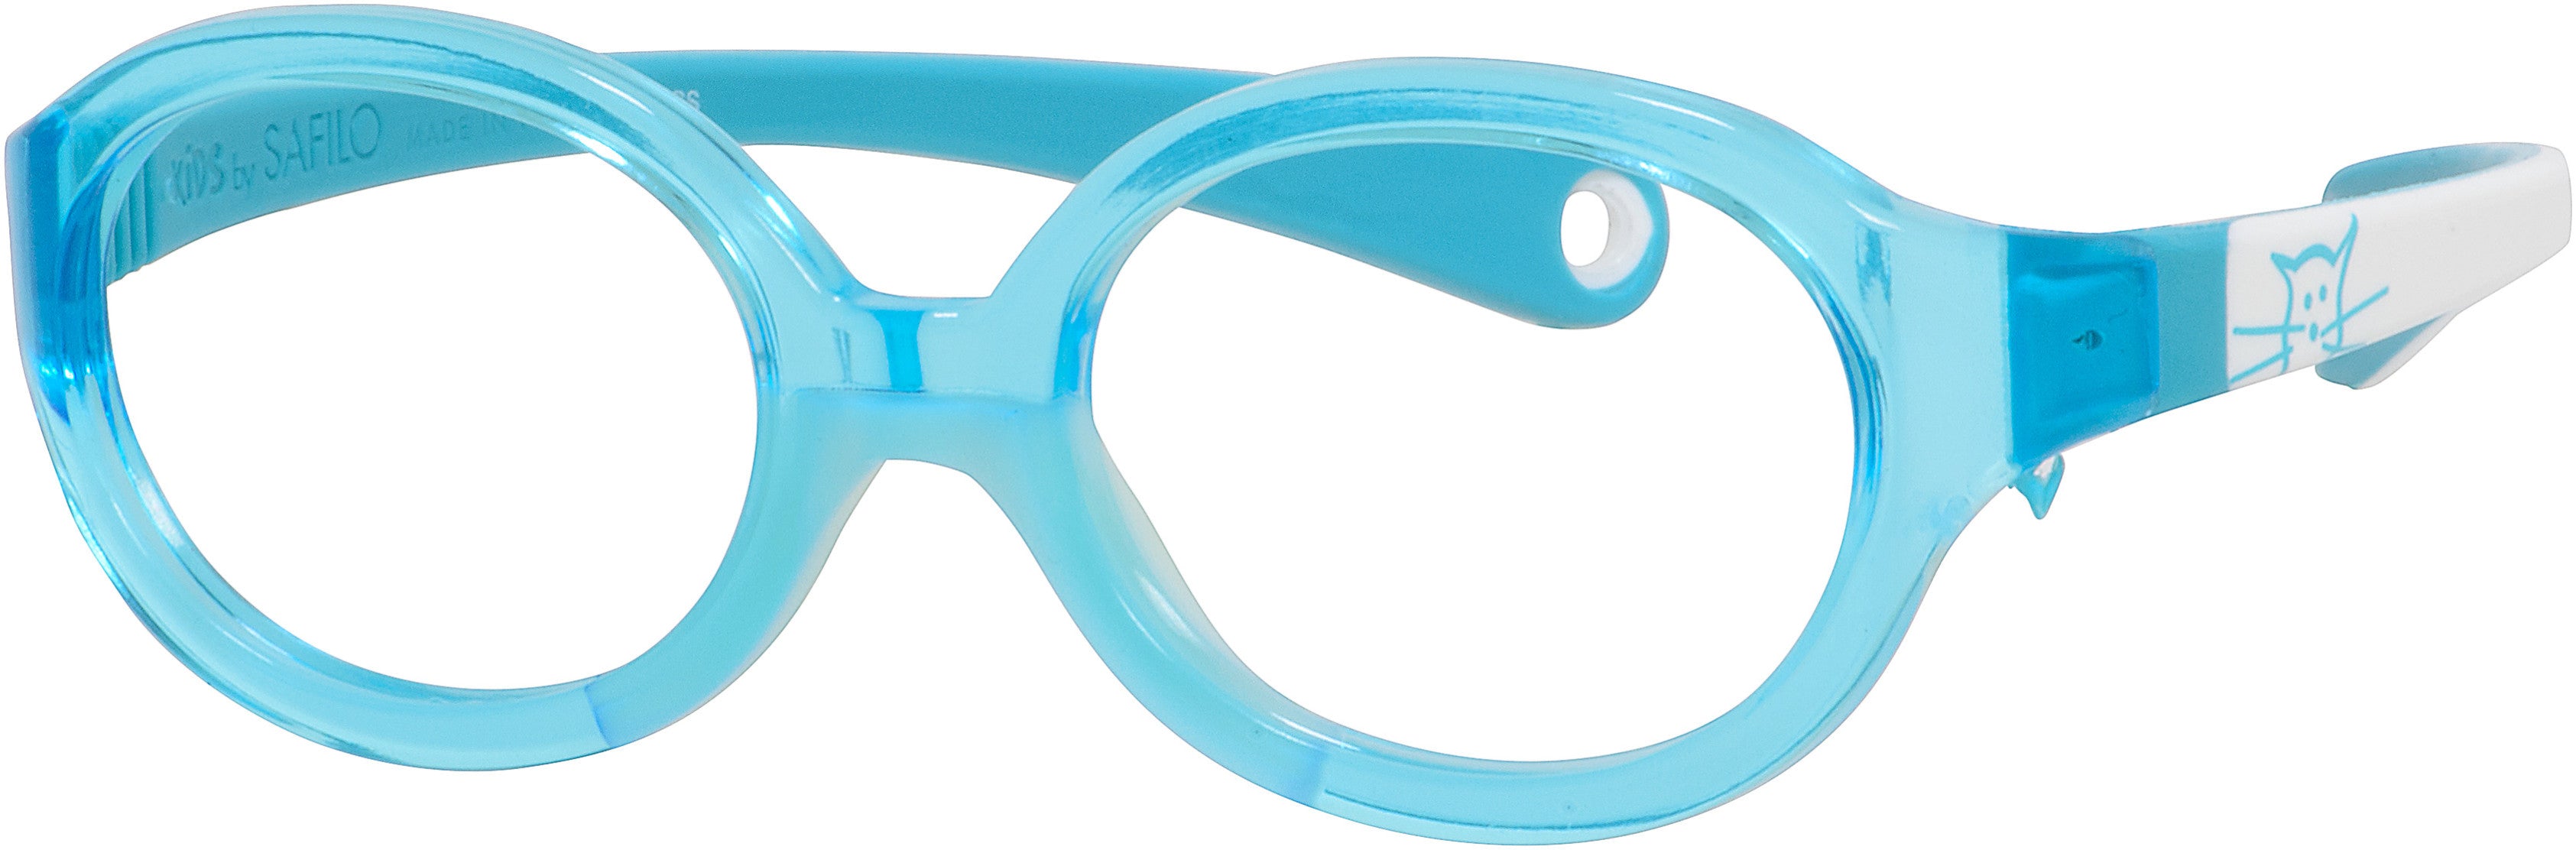 Safilo Safilo Kids Safilo 0001 Oval Modified Eyeglasses 0I75-0I75  Aqua White (00 Demo Lens)